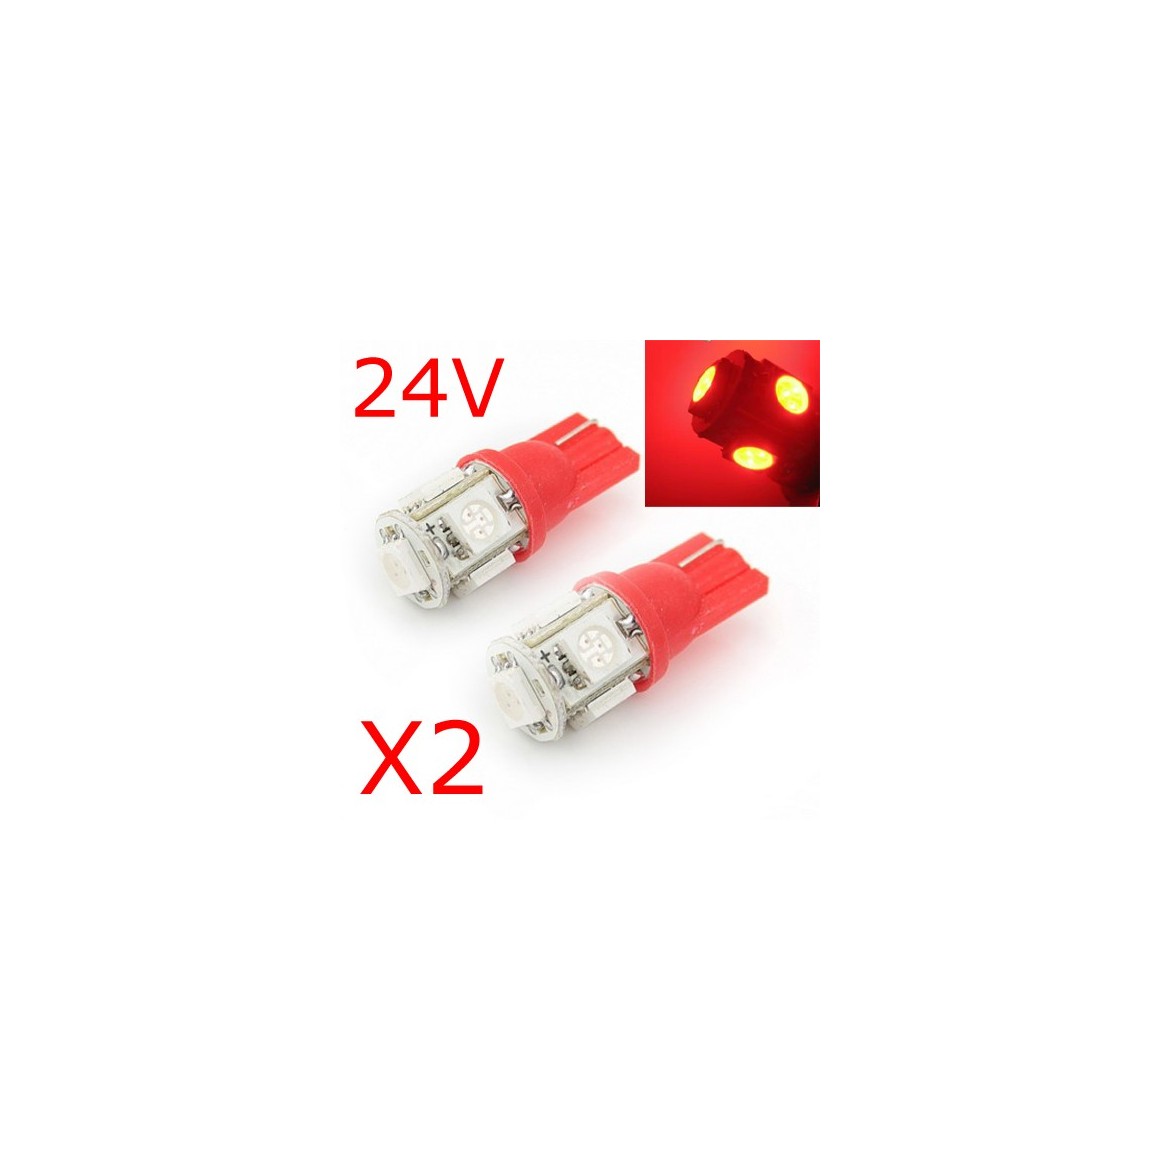 reform launch Secrete 2 x bulbs W5W T10 24V - 5 LED SMD Red